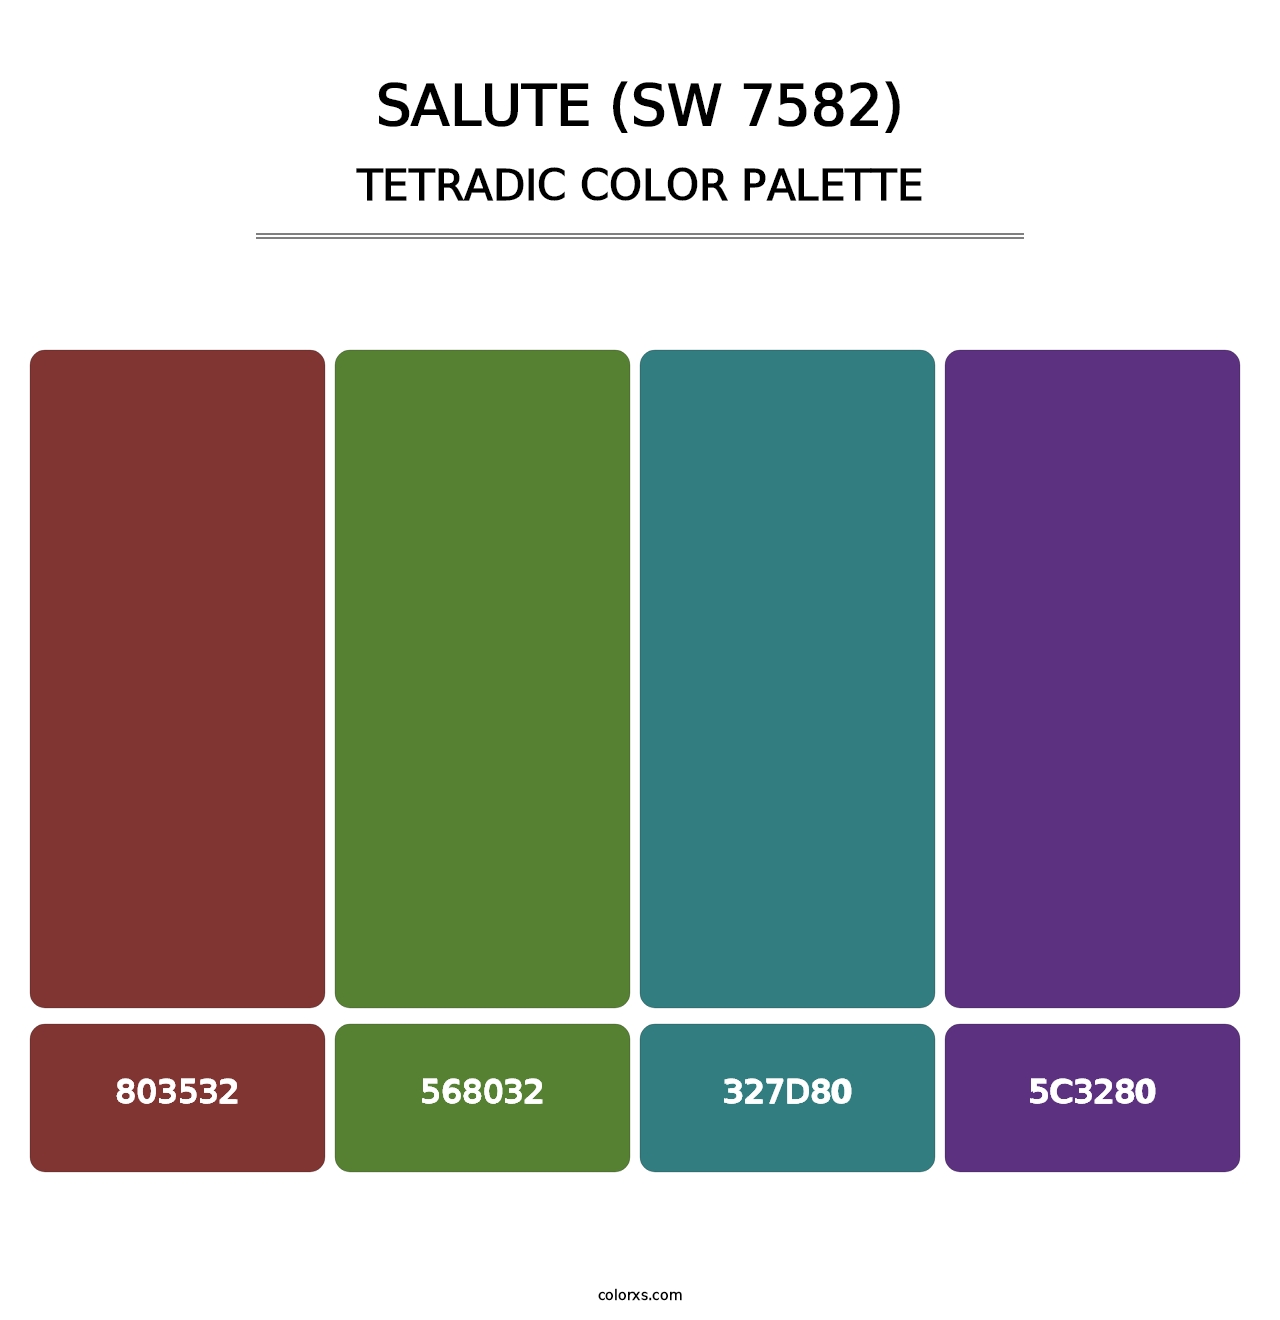 Salute (SW 7582) - Tetradic Color Palette